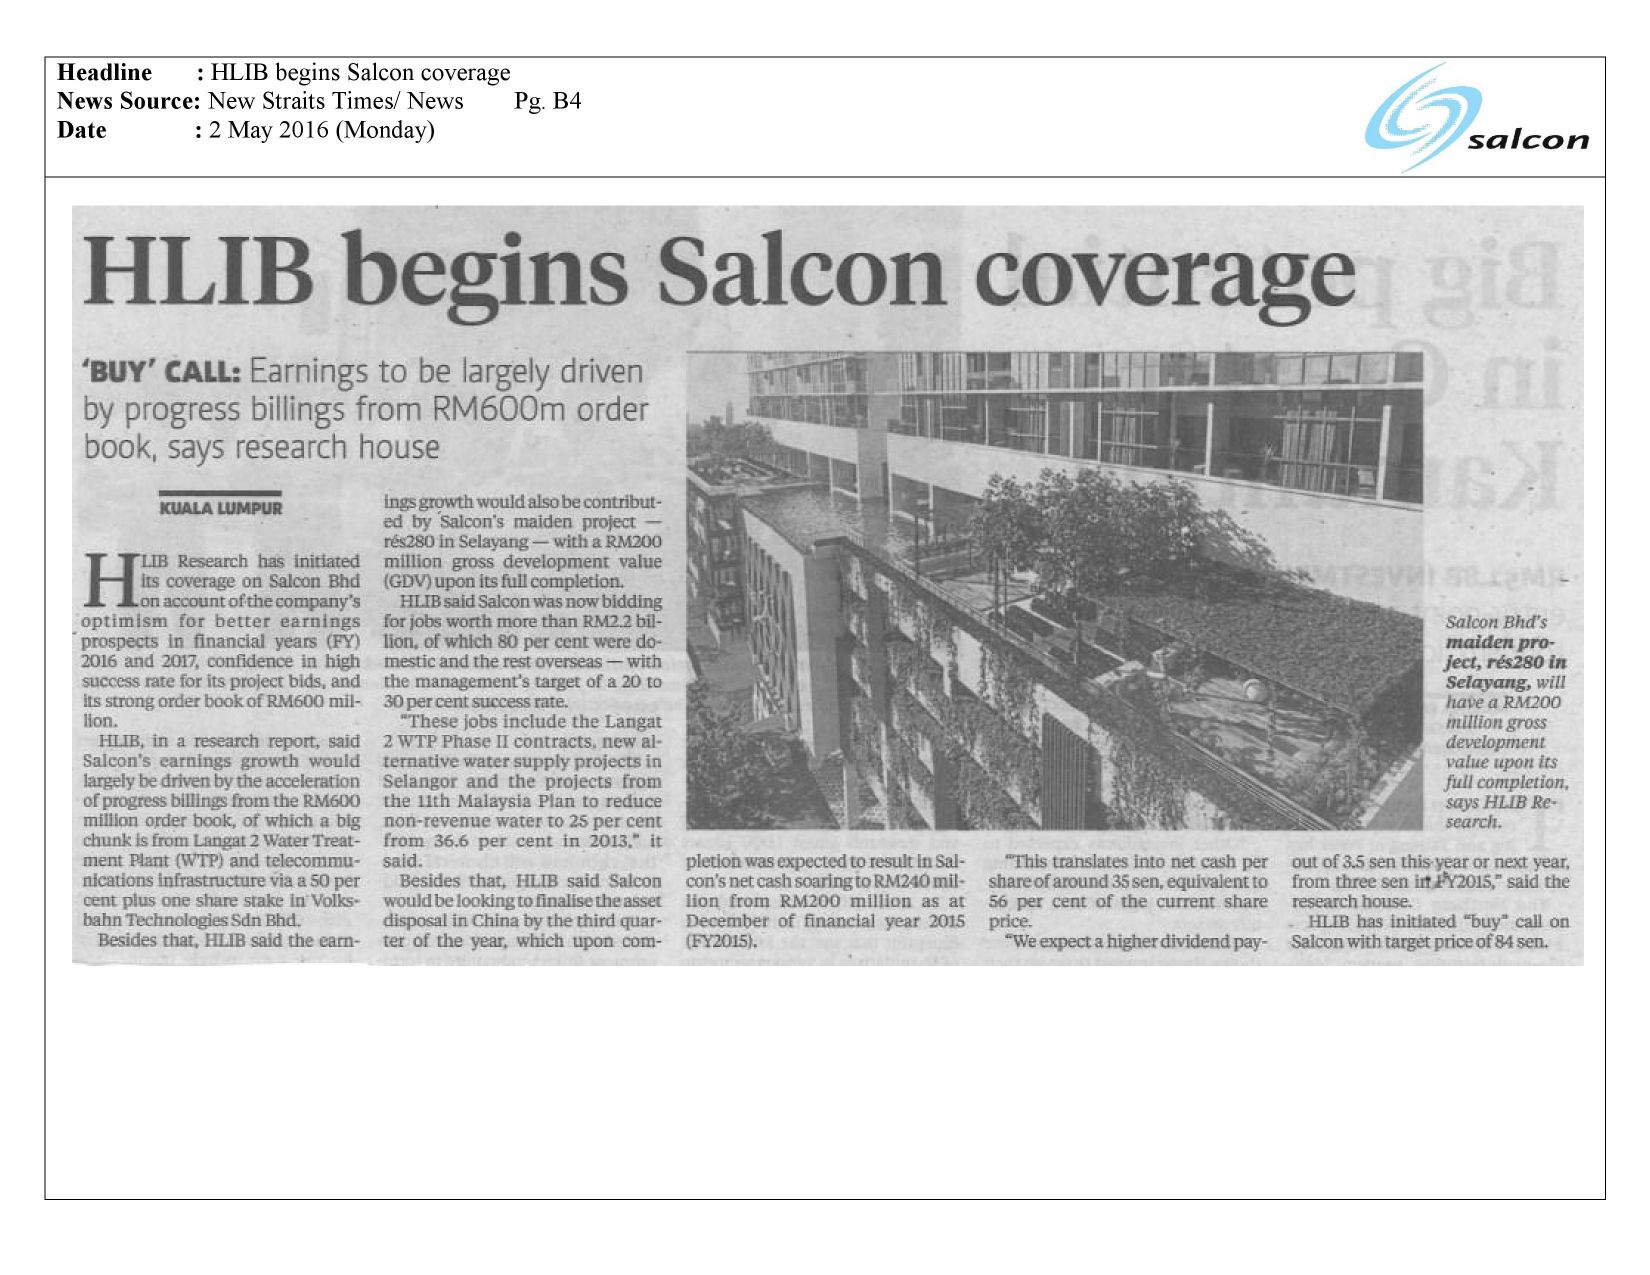 HLIB begins Salcon coverage